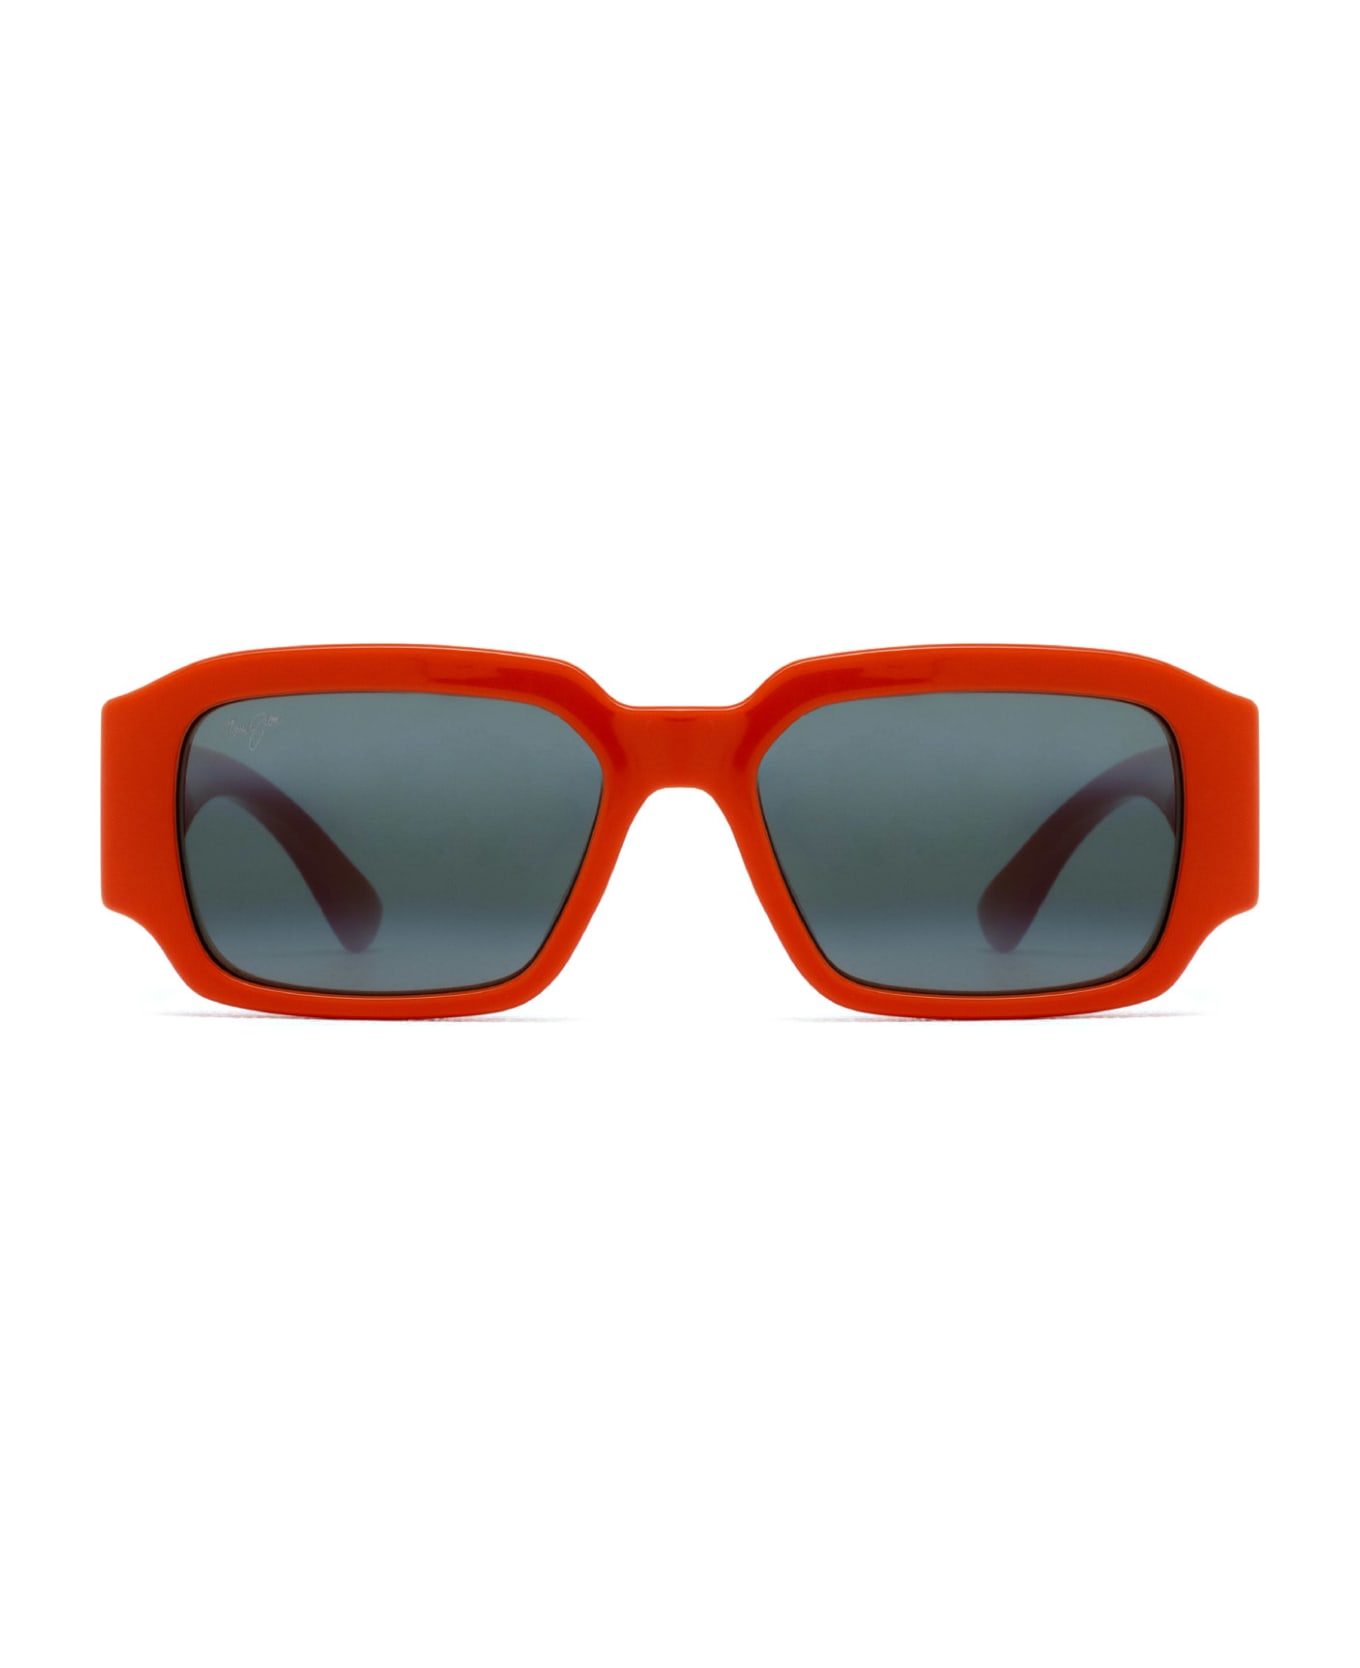 Maui Jim Mj639 Shiny Orange Sunglasses - Shiny Orange